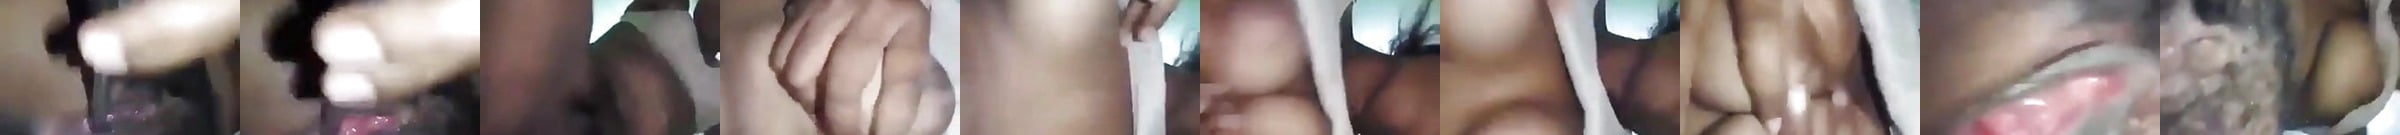 Video Call Sex Abg Indonesia Barabas Brengsek Free Porn 9f Xhamster